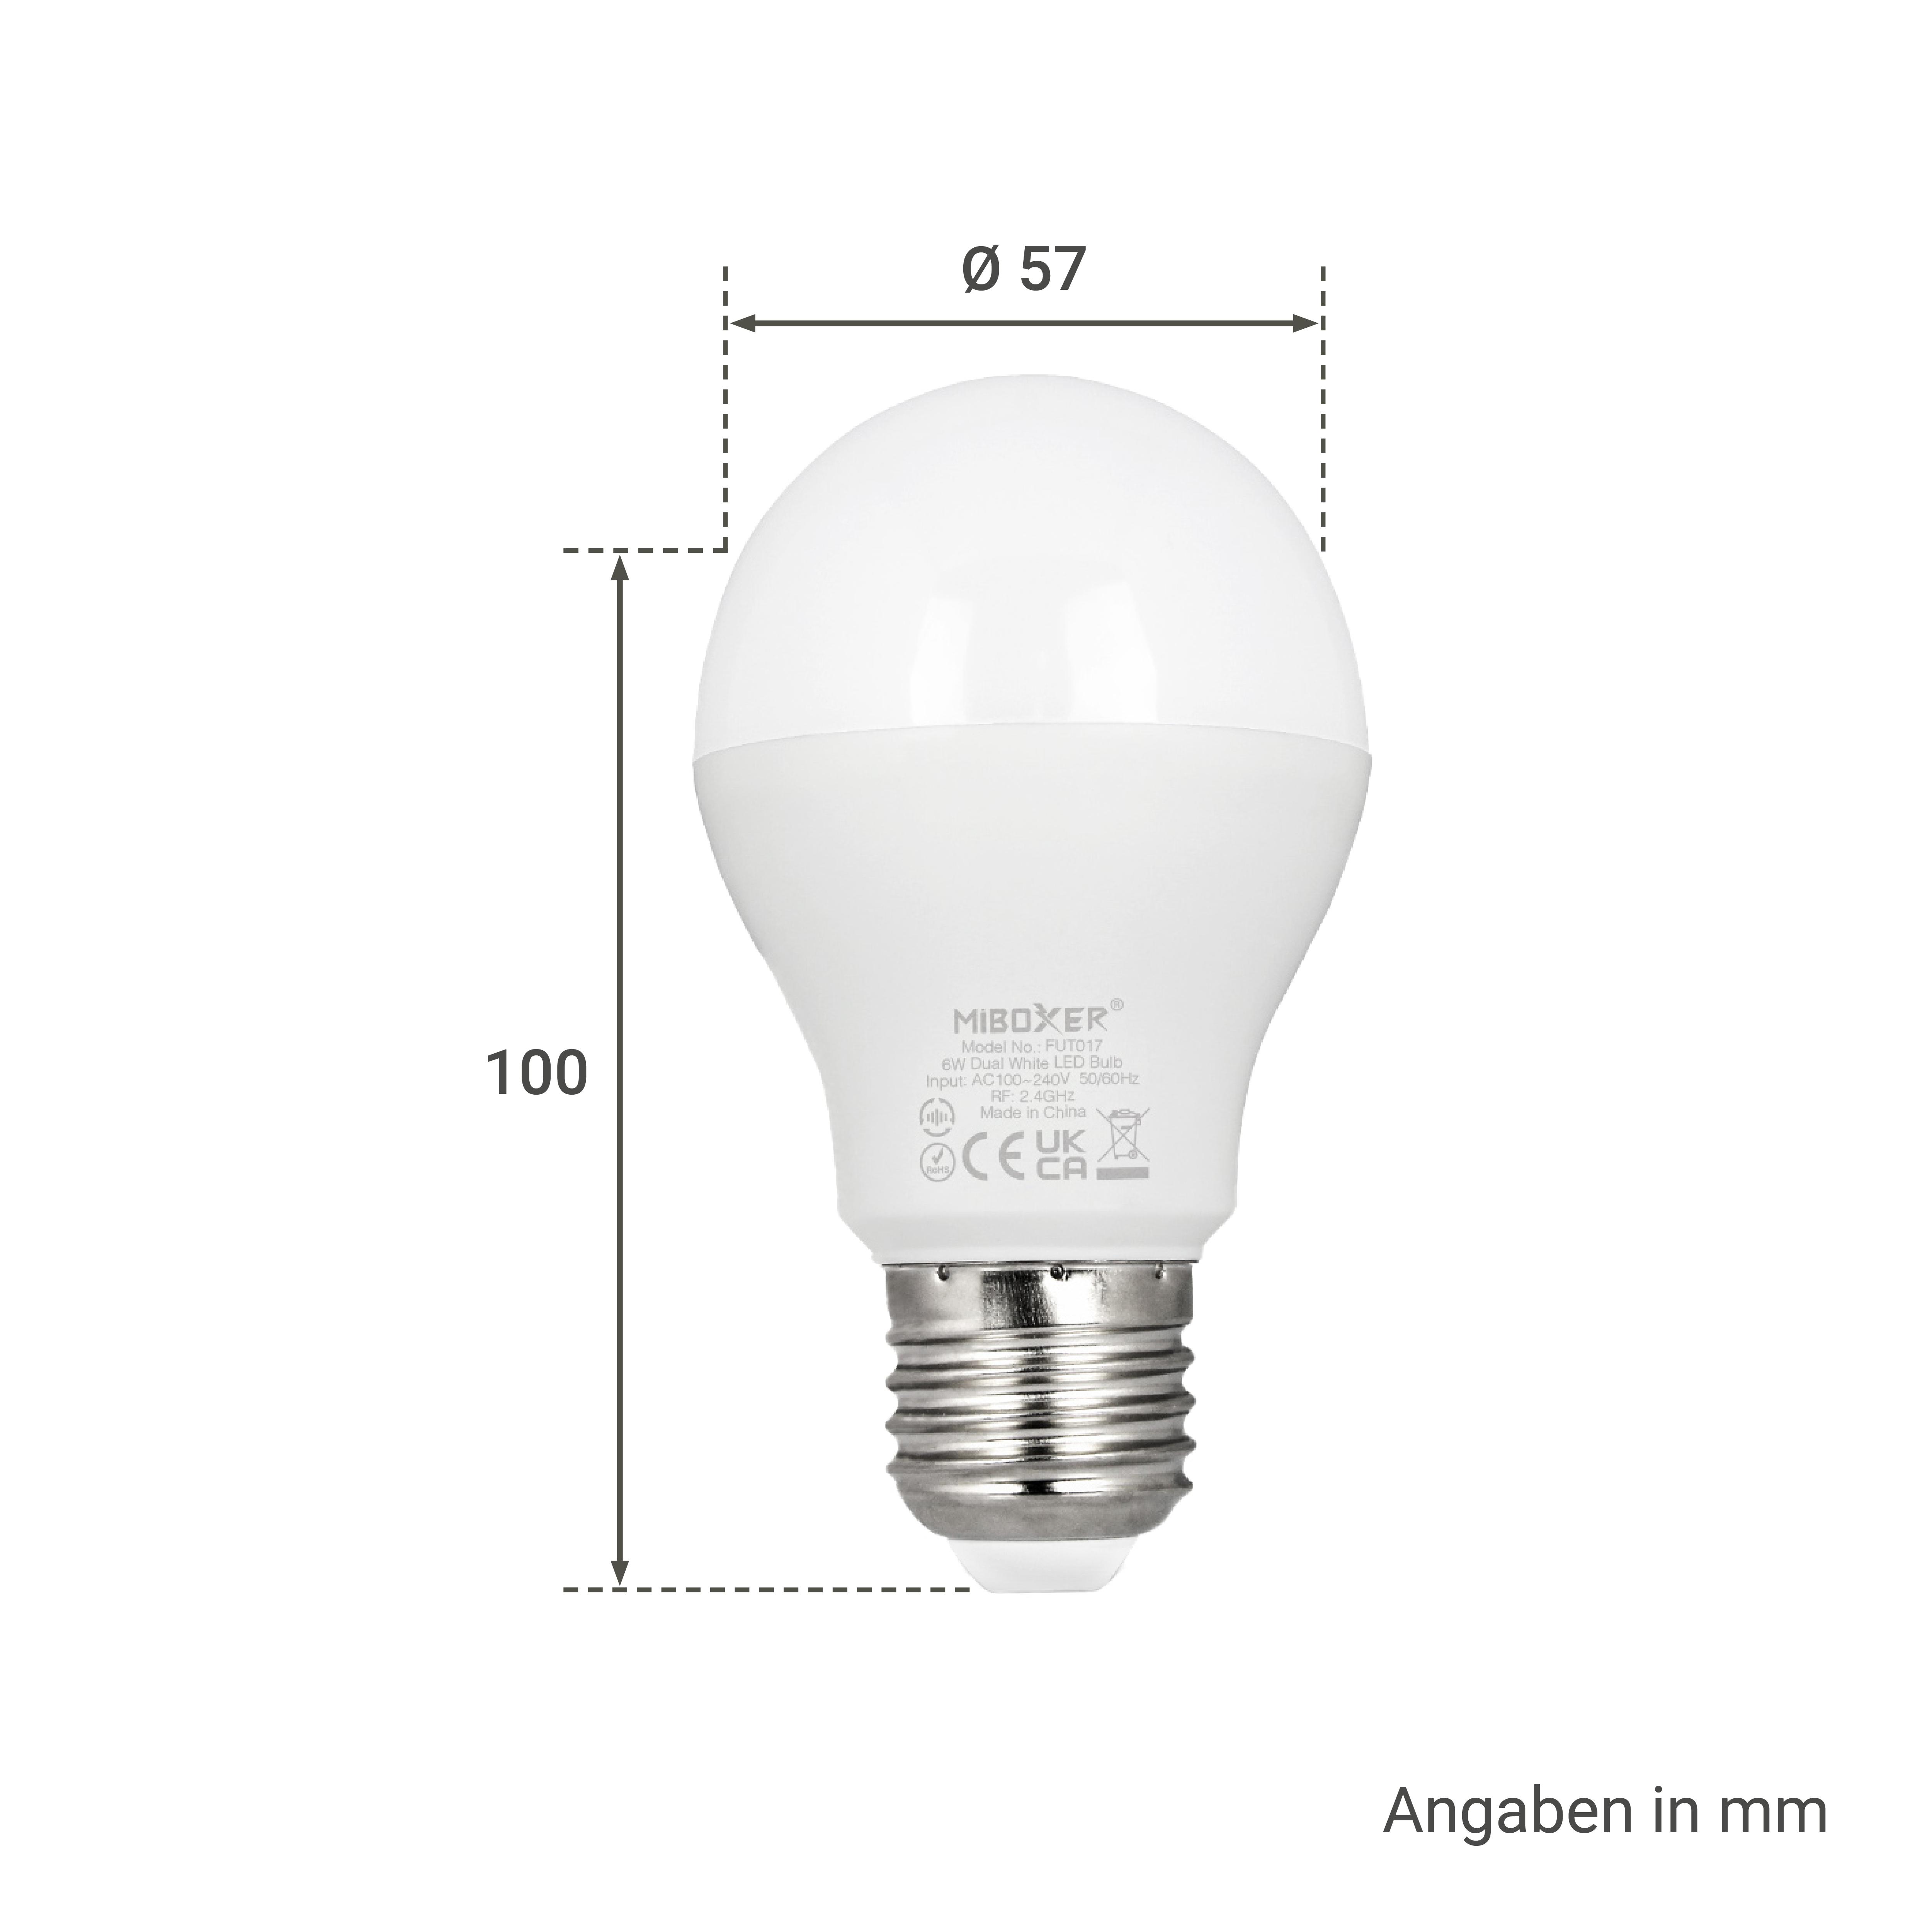 MiBoxer CCT Lampe 6W DUAL WHITE E27 | WiFi ready | FUT017